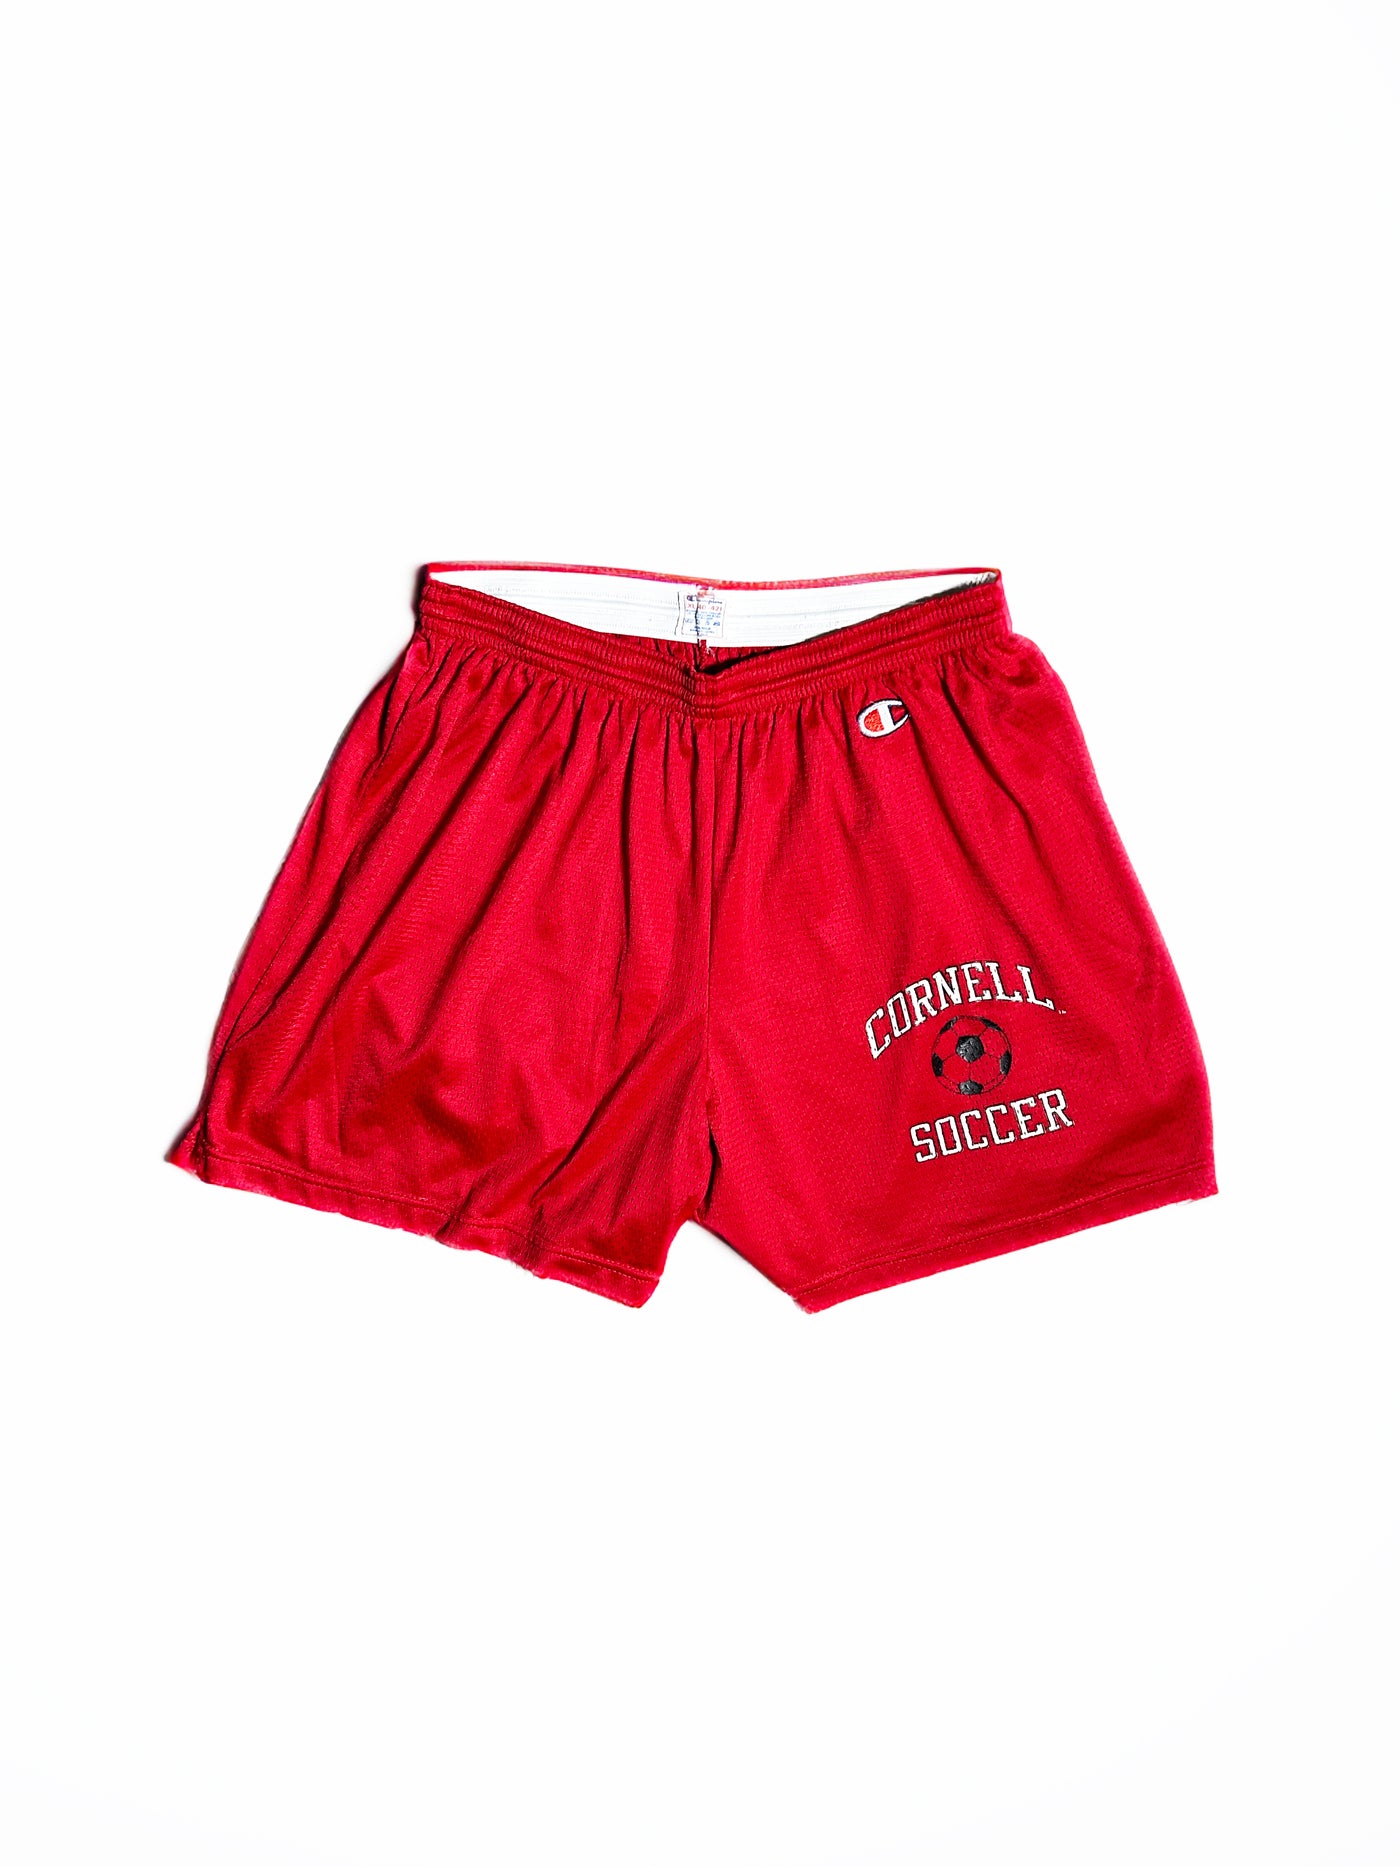 Vintage 90s Cornell Soccer Shorts